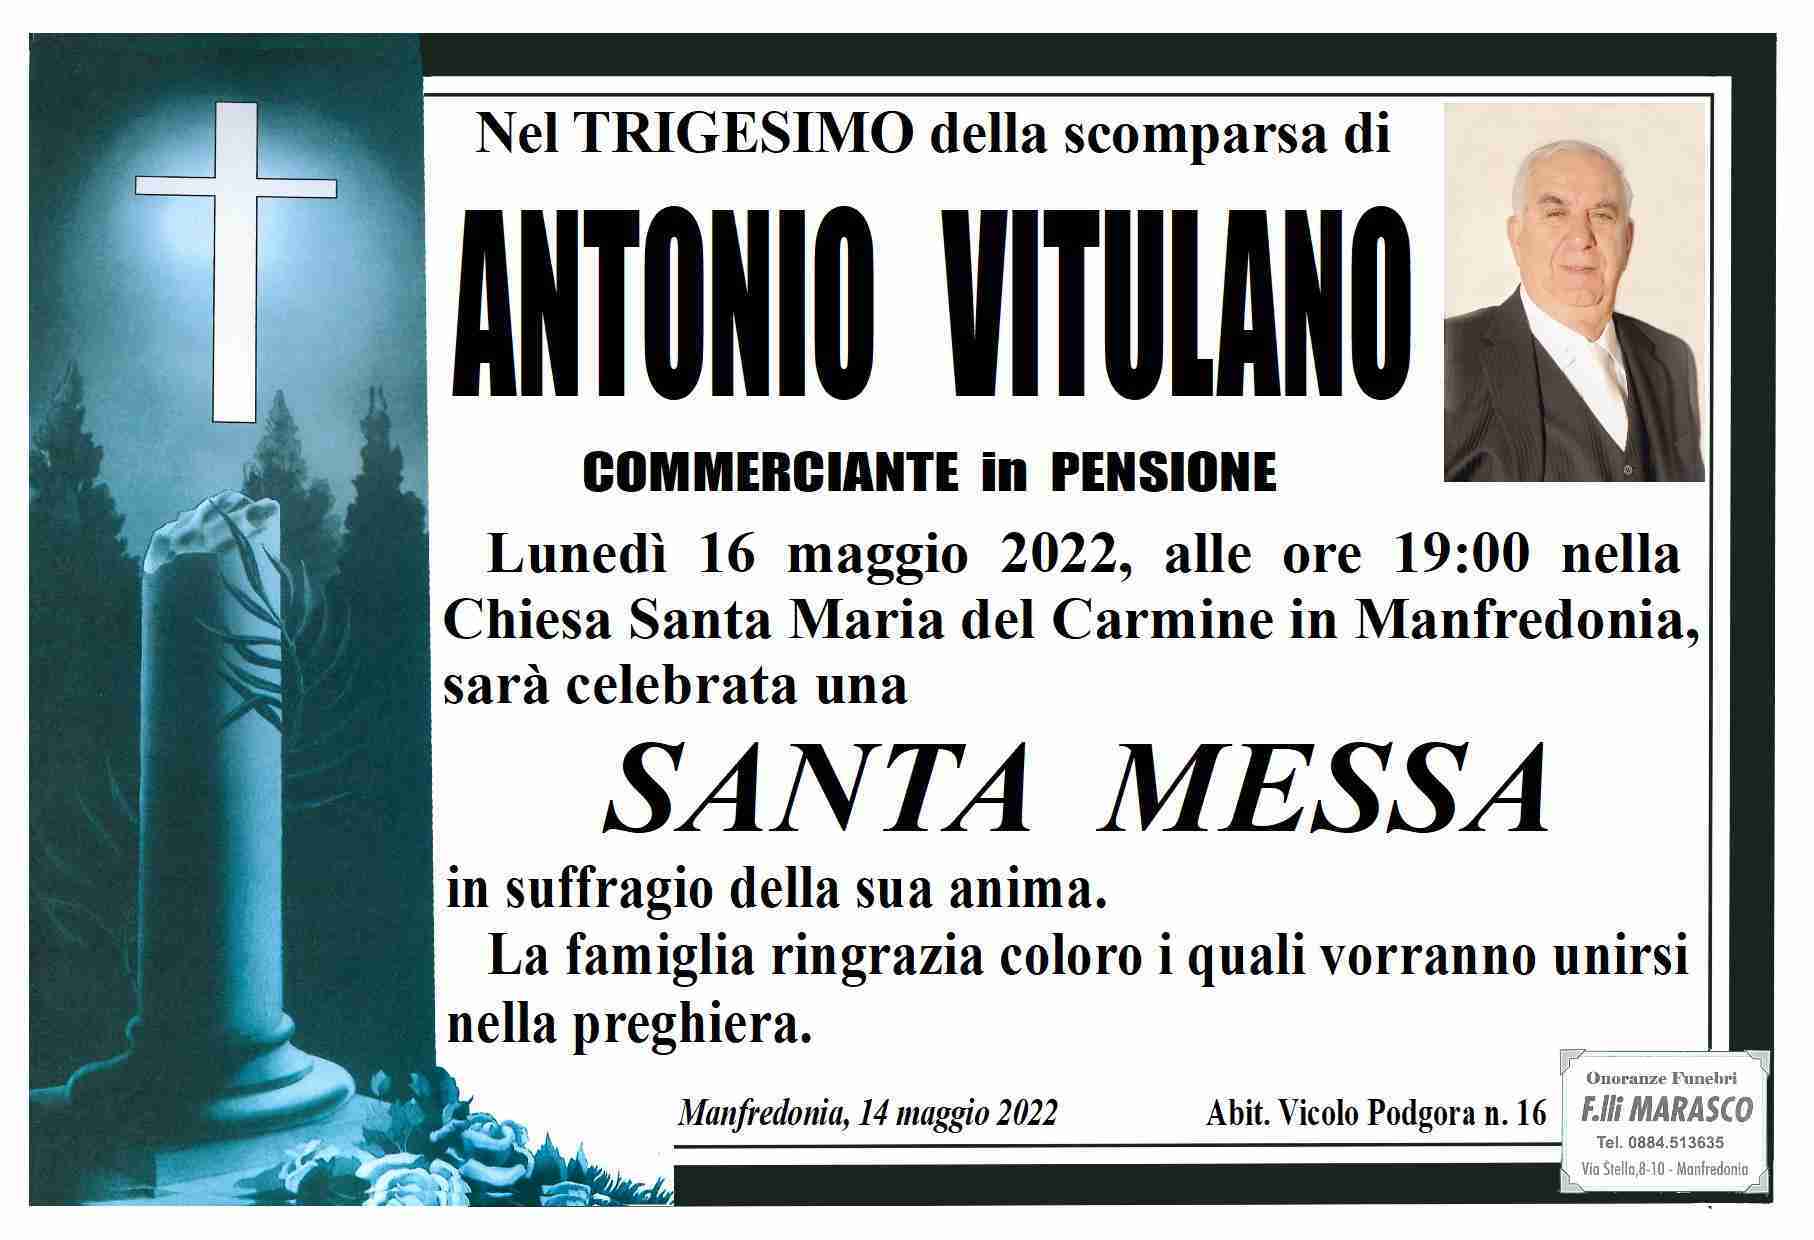 Antonio Vitulano